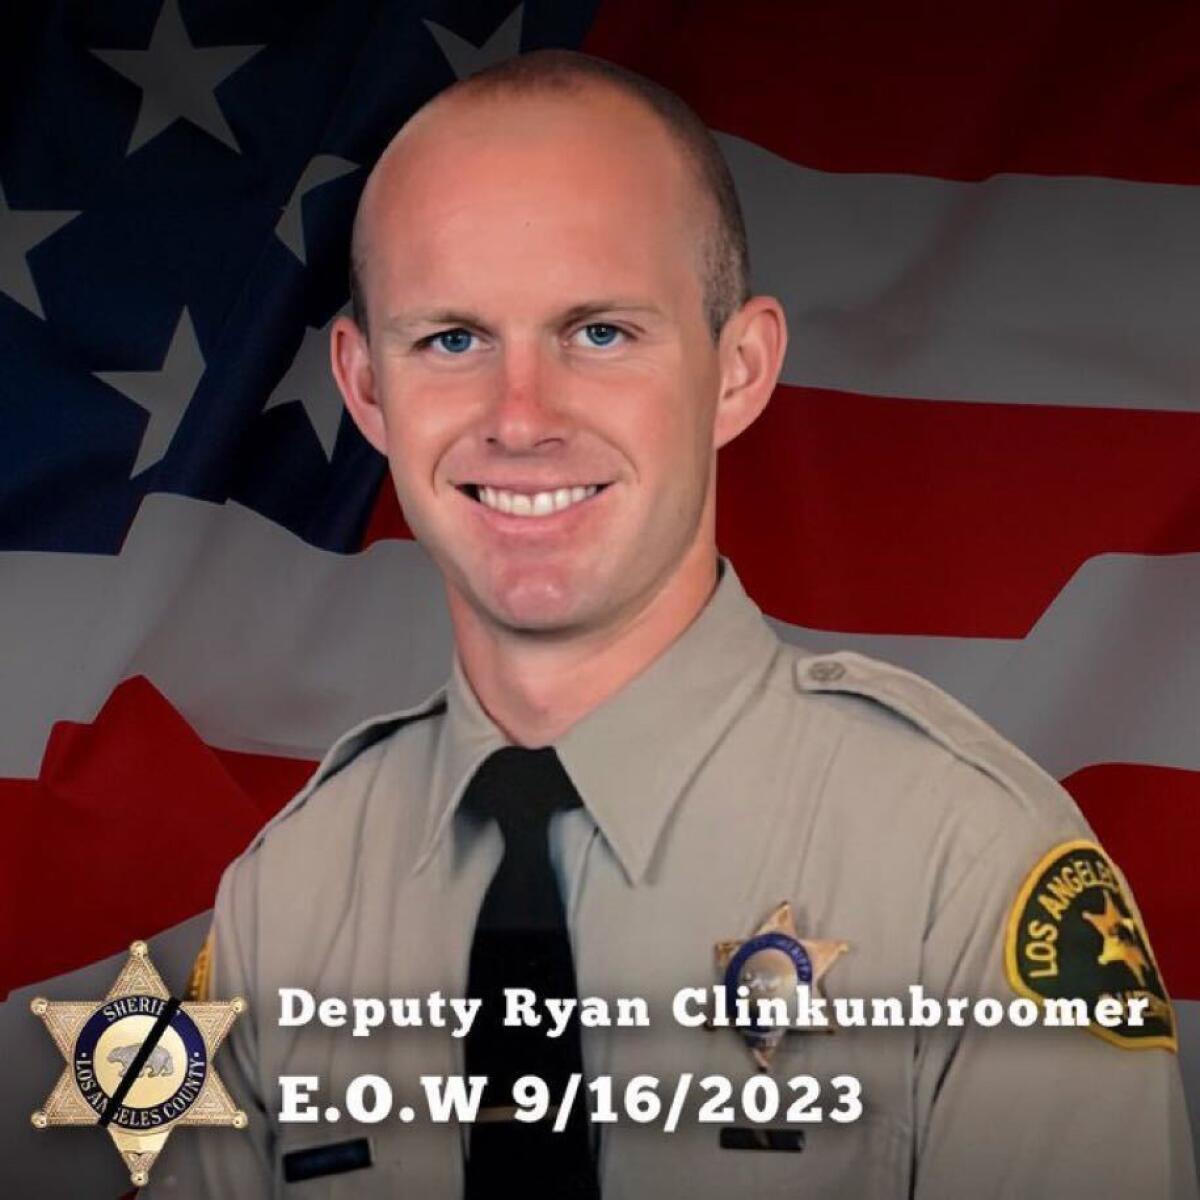 Deputy Ryan Clinkunbroomer, 8 Year Veteran Of LASD It says End Of Watch 9/16/23